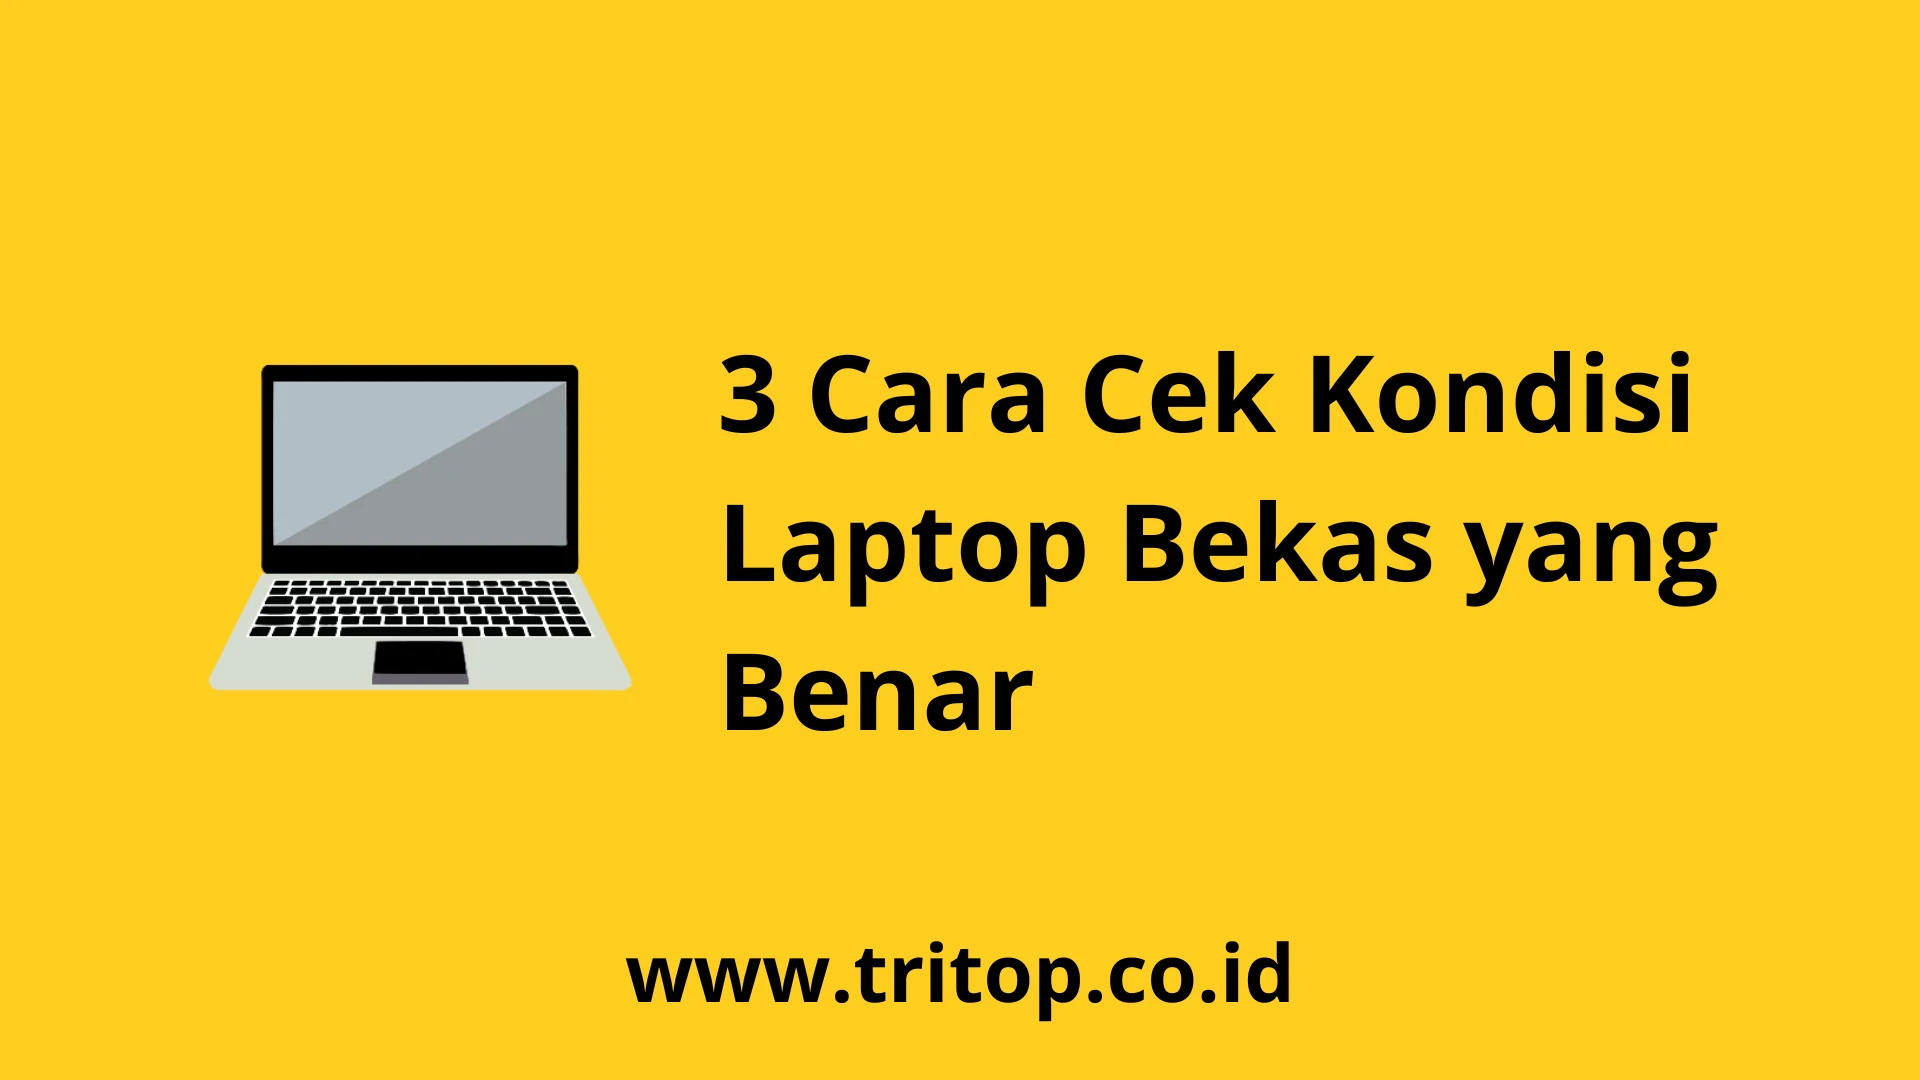 Cek Kondisi Laptop Bekas www.tritop.co.id